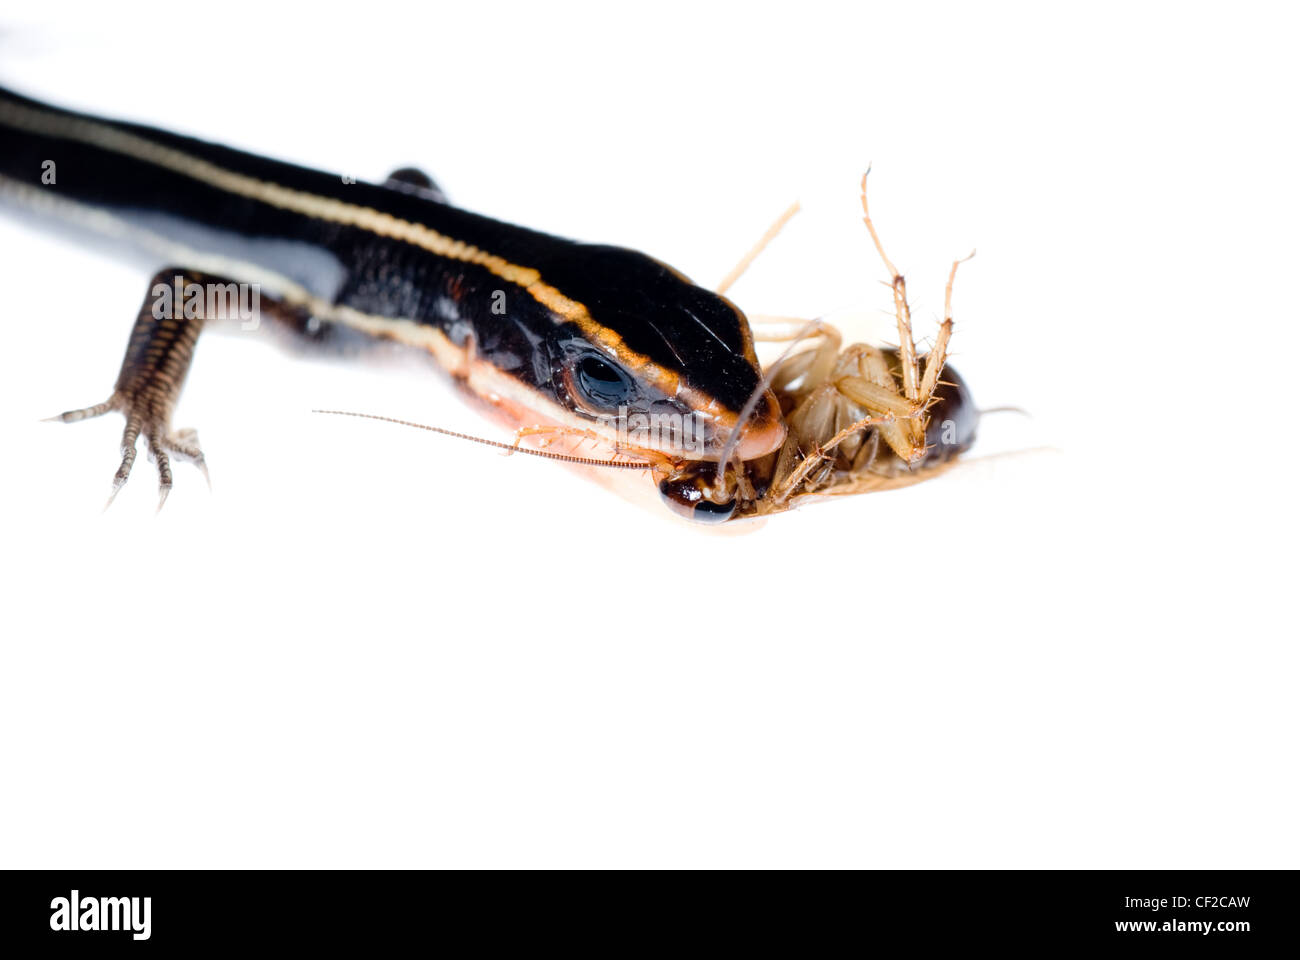 animal lizard eat roach bug Stock Photo